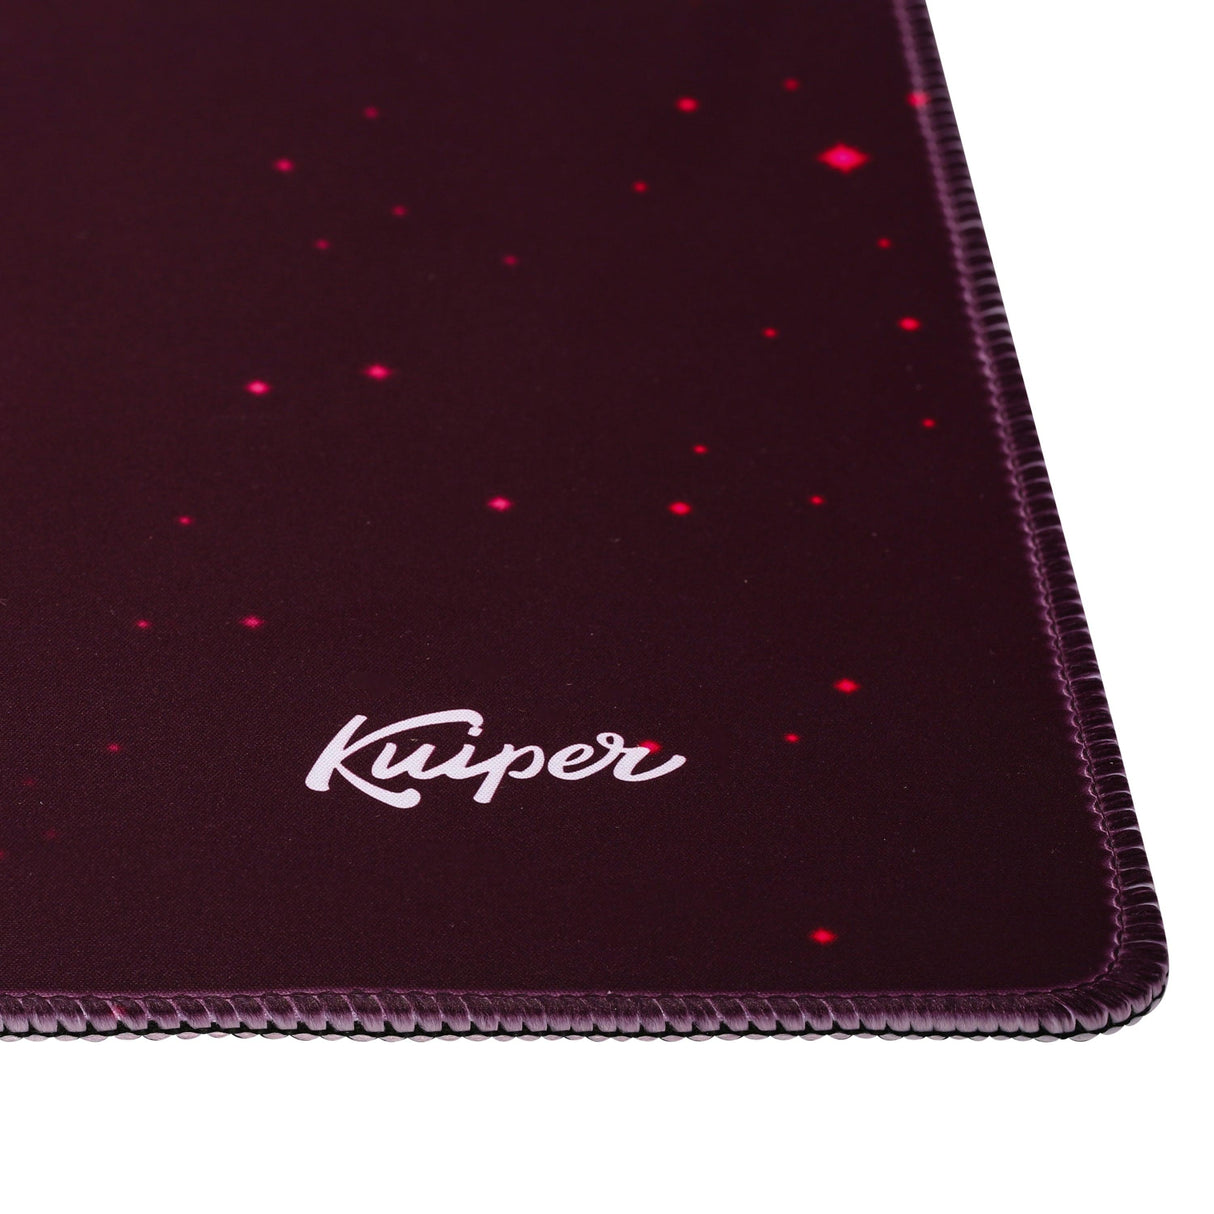 Kuiper Limited Edition Aurora XXL Desk Mat - FrozenCPU